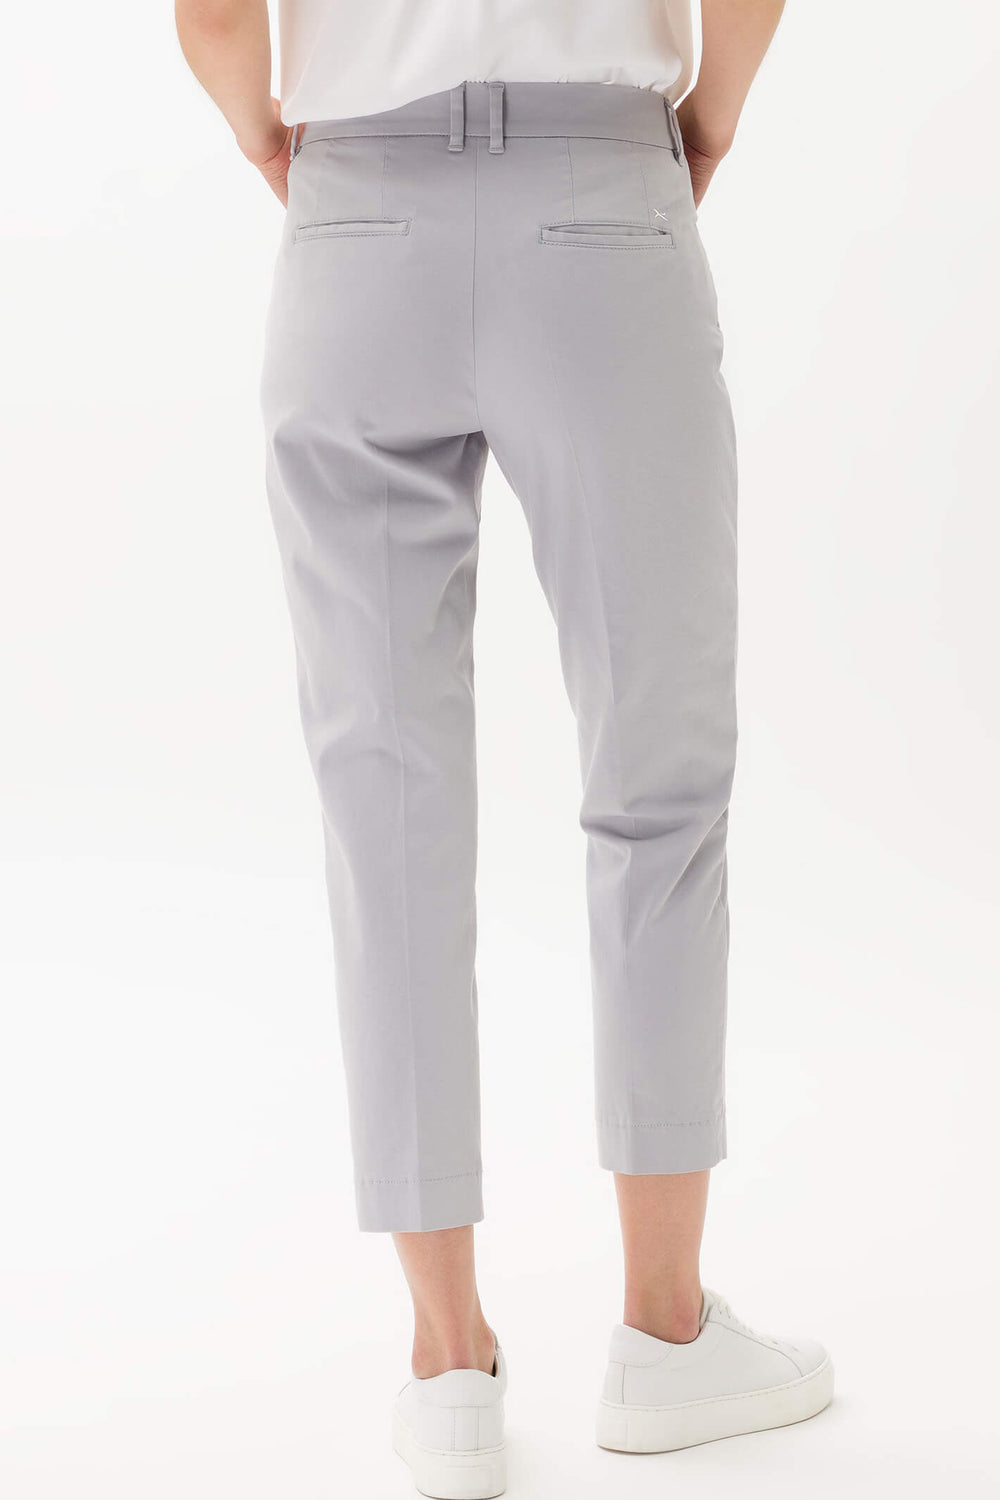 Brax 72-1458 09 Mara S Light Grey Slim Fit Trousers - Shirley Allum Boutique